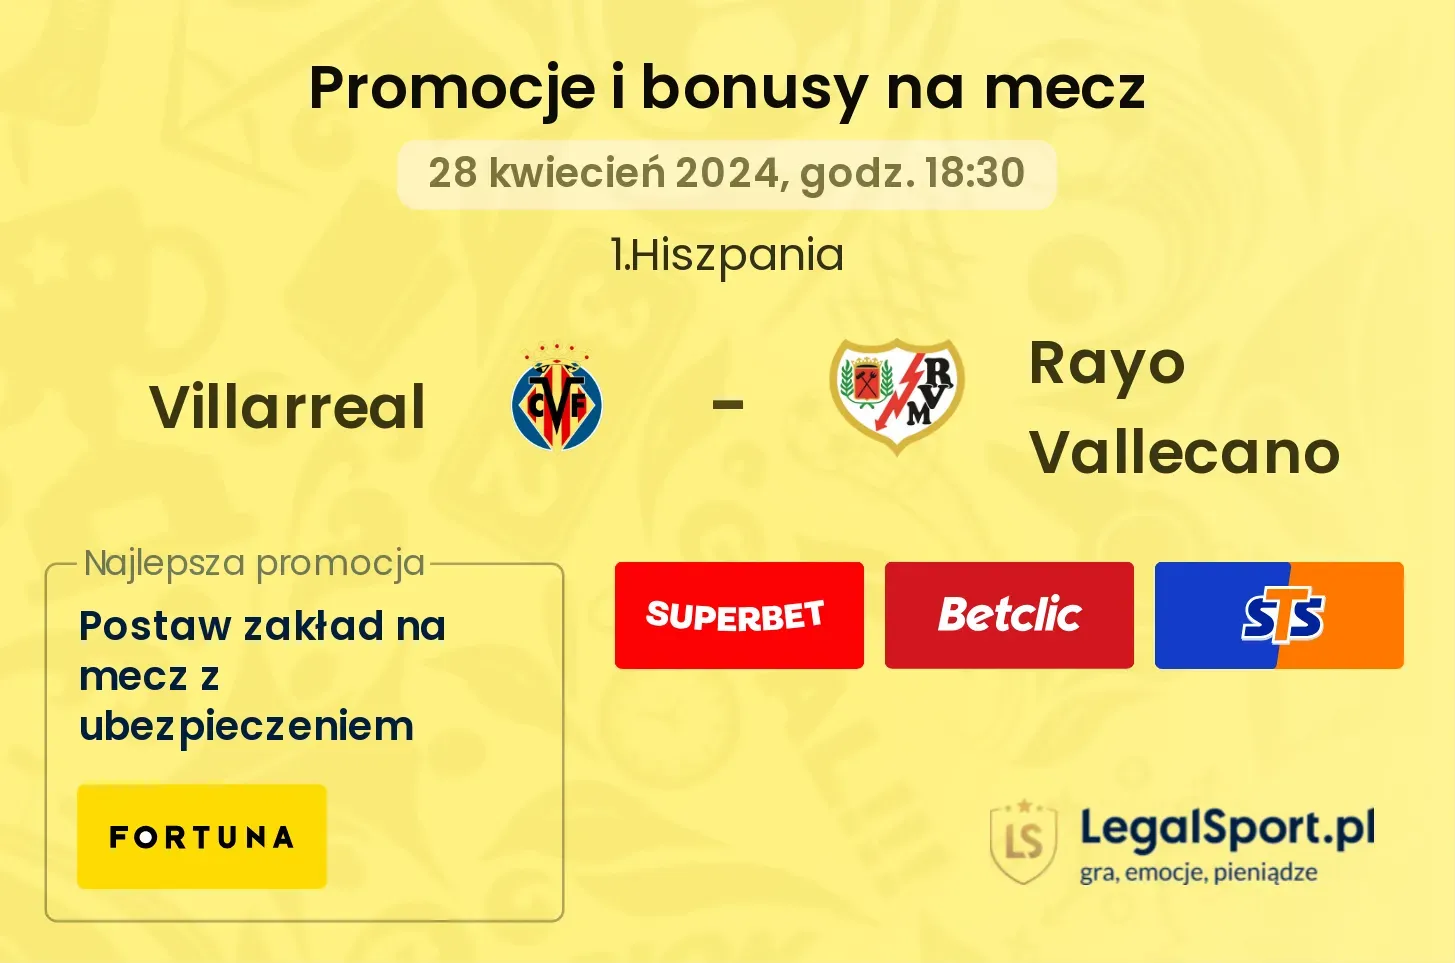 Villarreal - Rayo Vallecano promocje bonusy na mecz